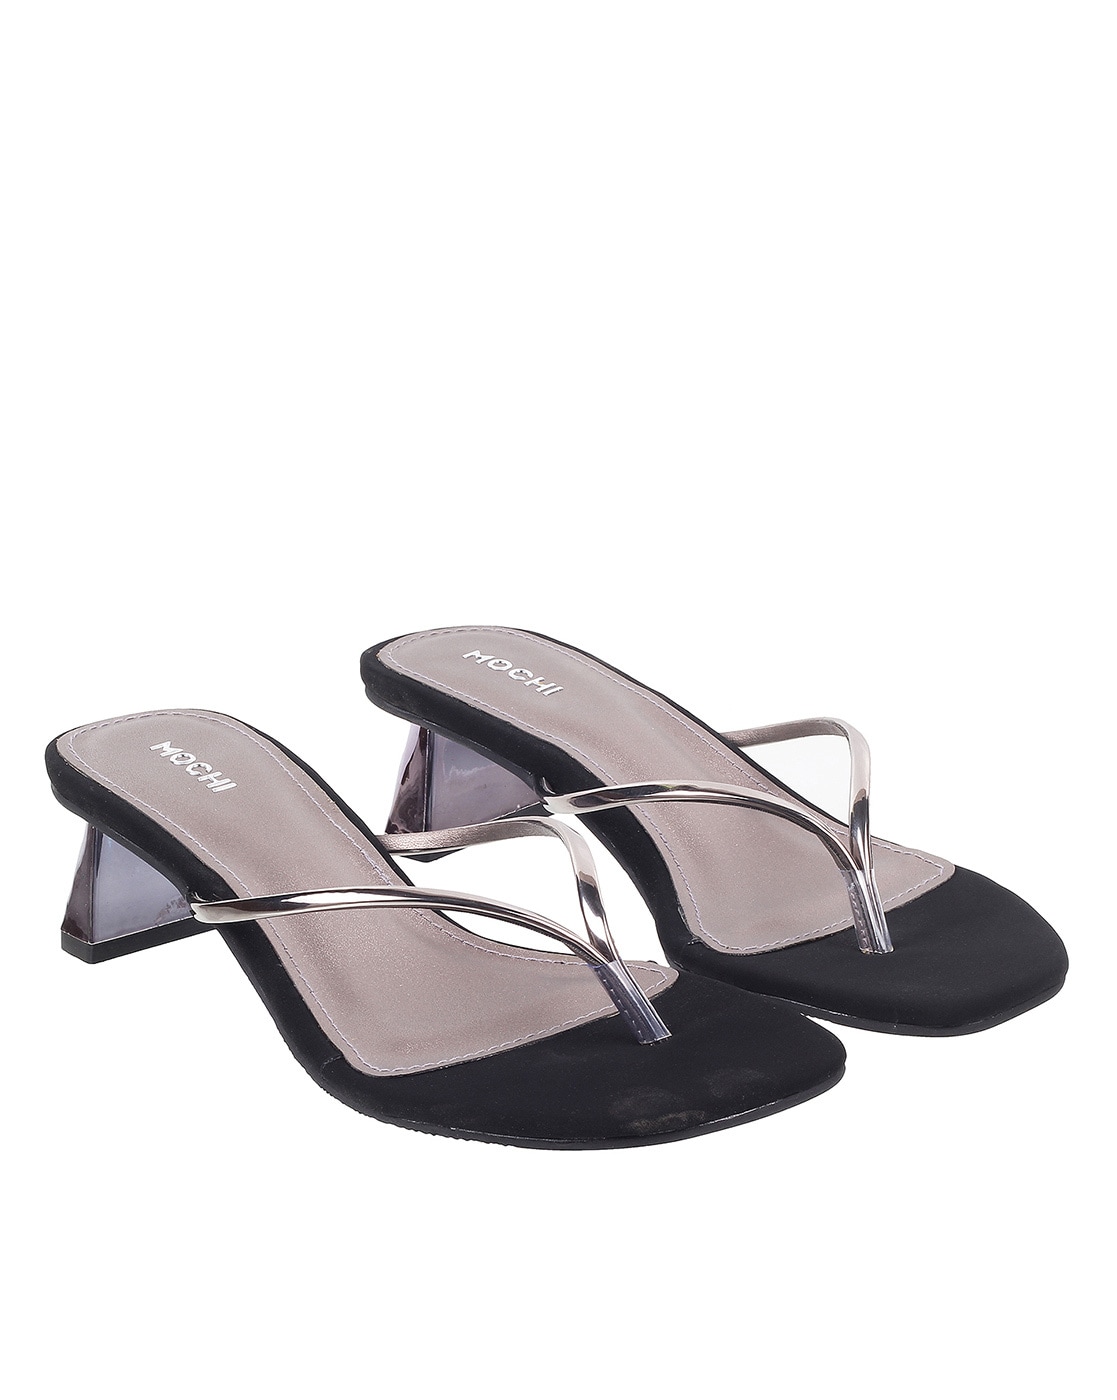 Buy Mochi Mochi Women Transparent & Grey Solid Sandals at Redfynd